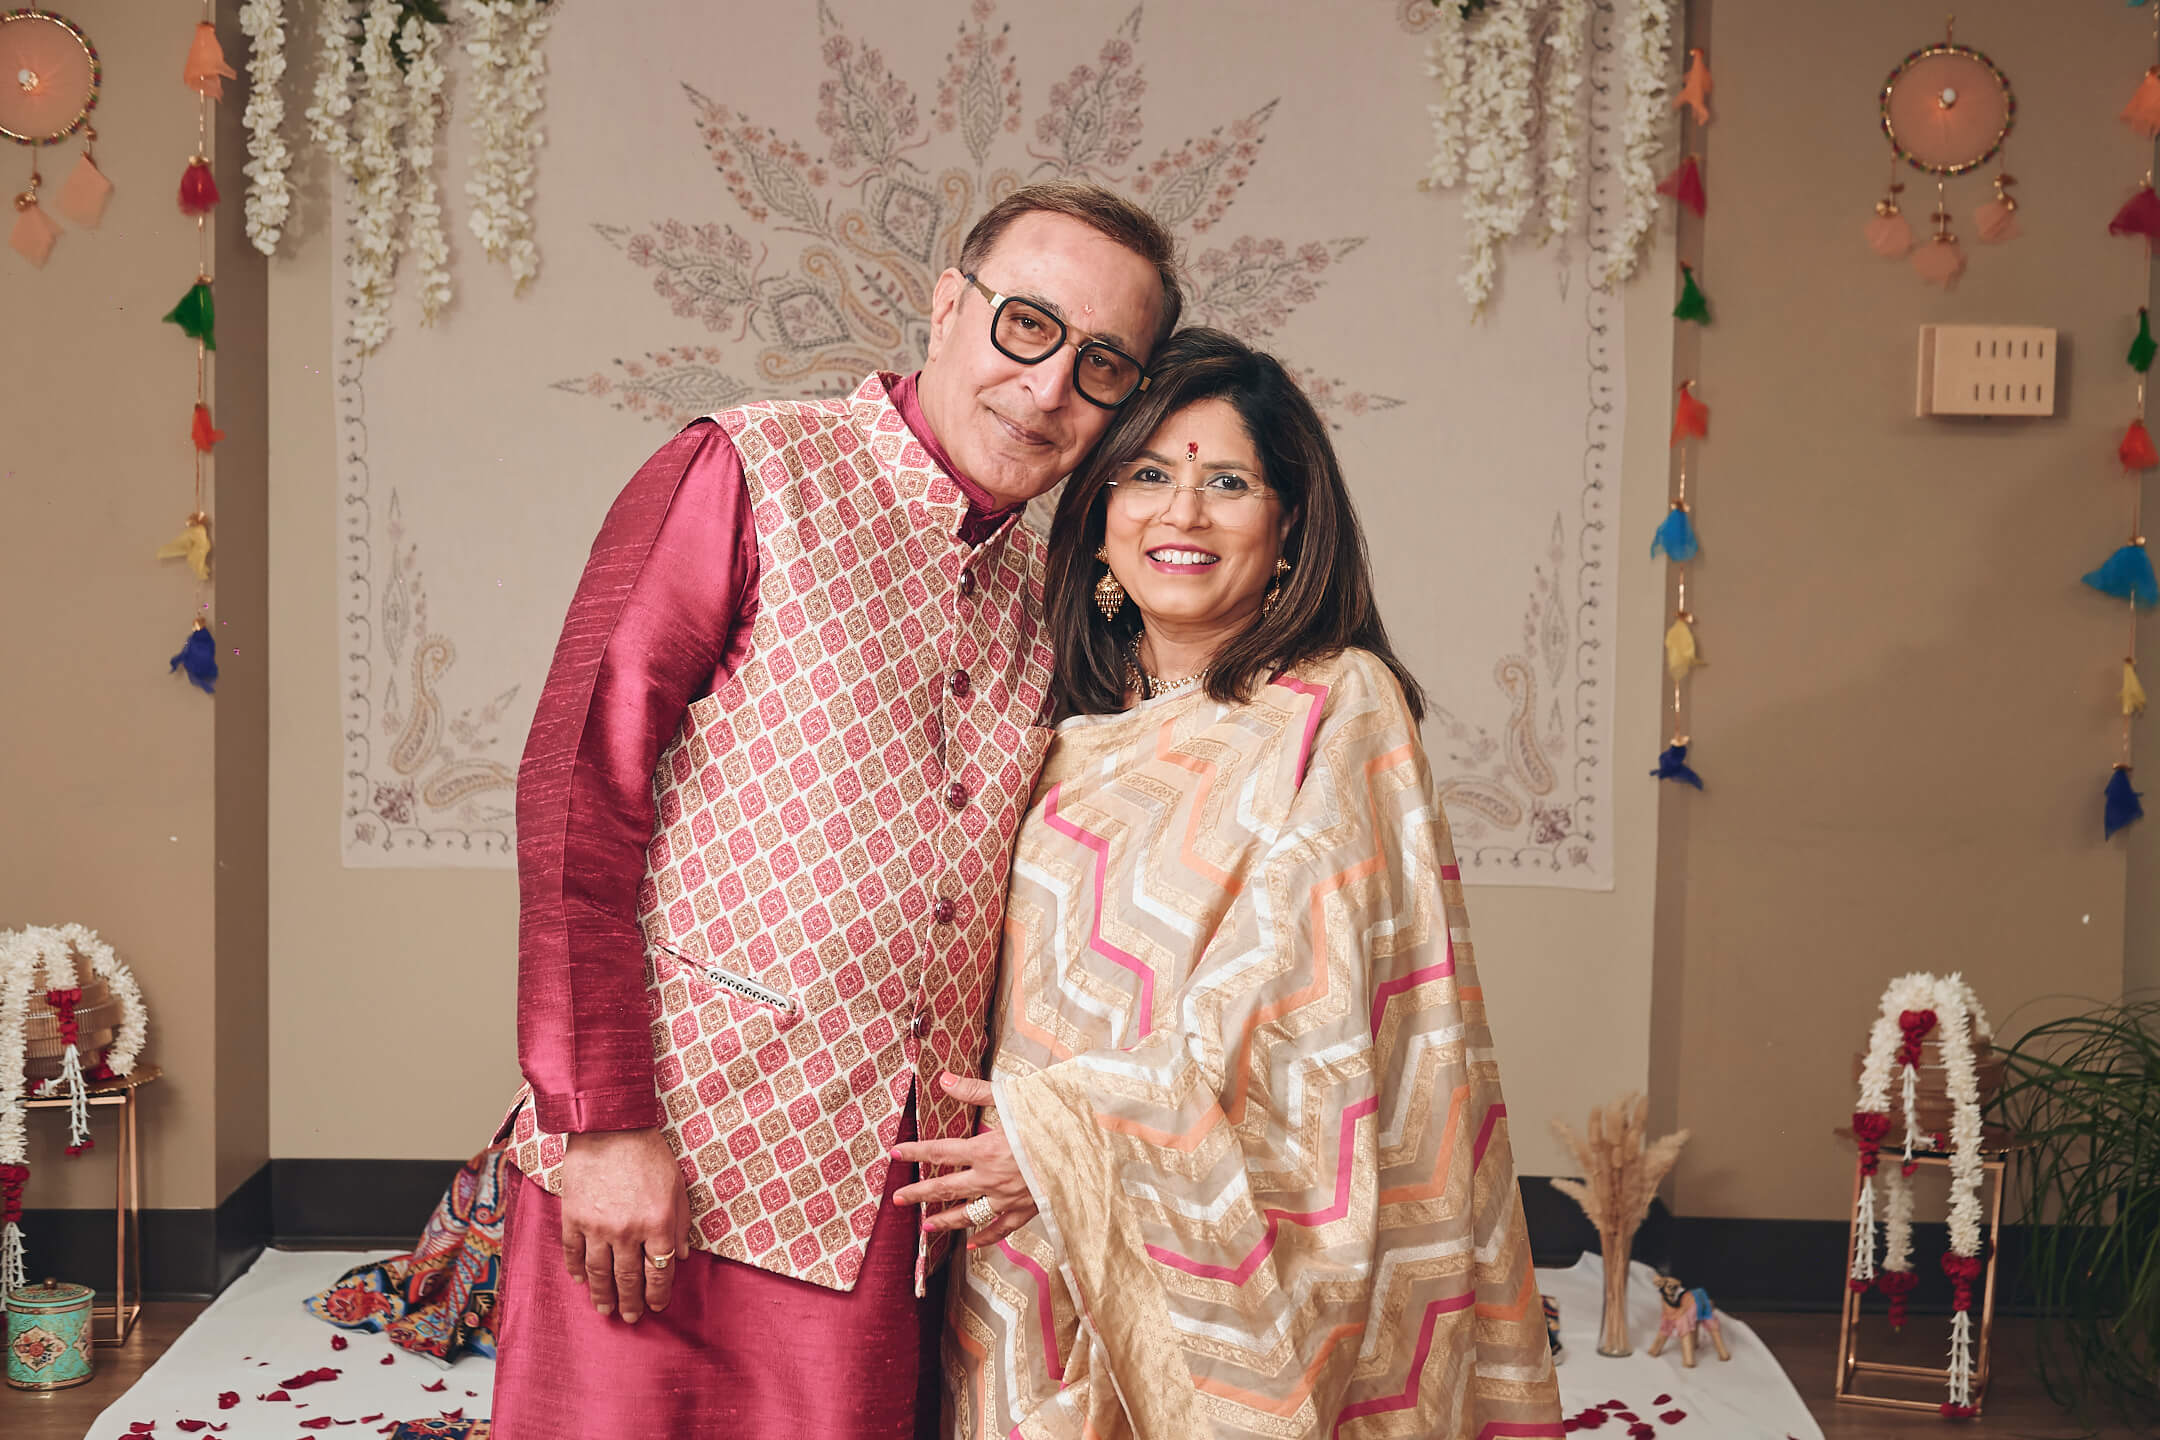 Sash & Indro - Ashirwad Indian Wedding Ceremony - Event Photography - Wedding Photography - Harmon Cove Towers - Secaucus New Jersey 